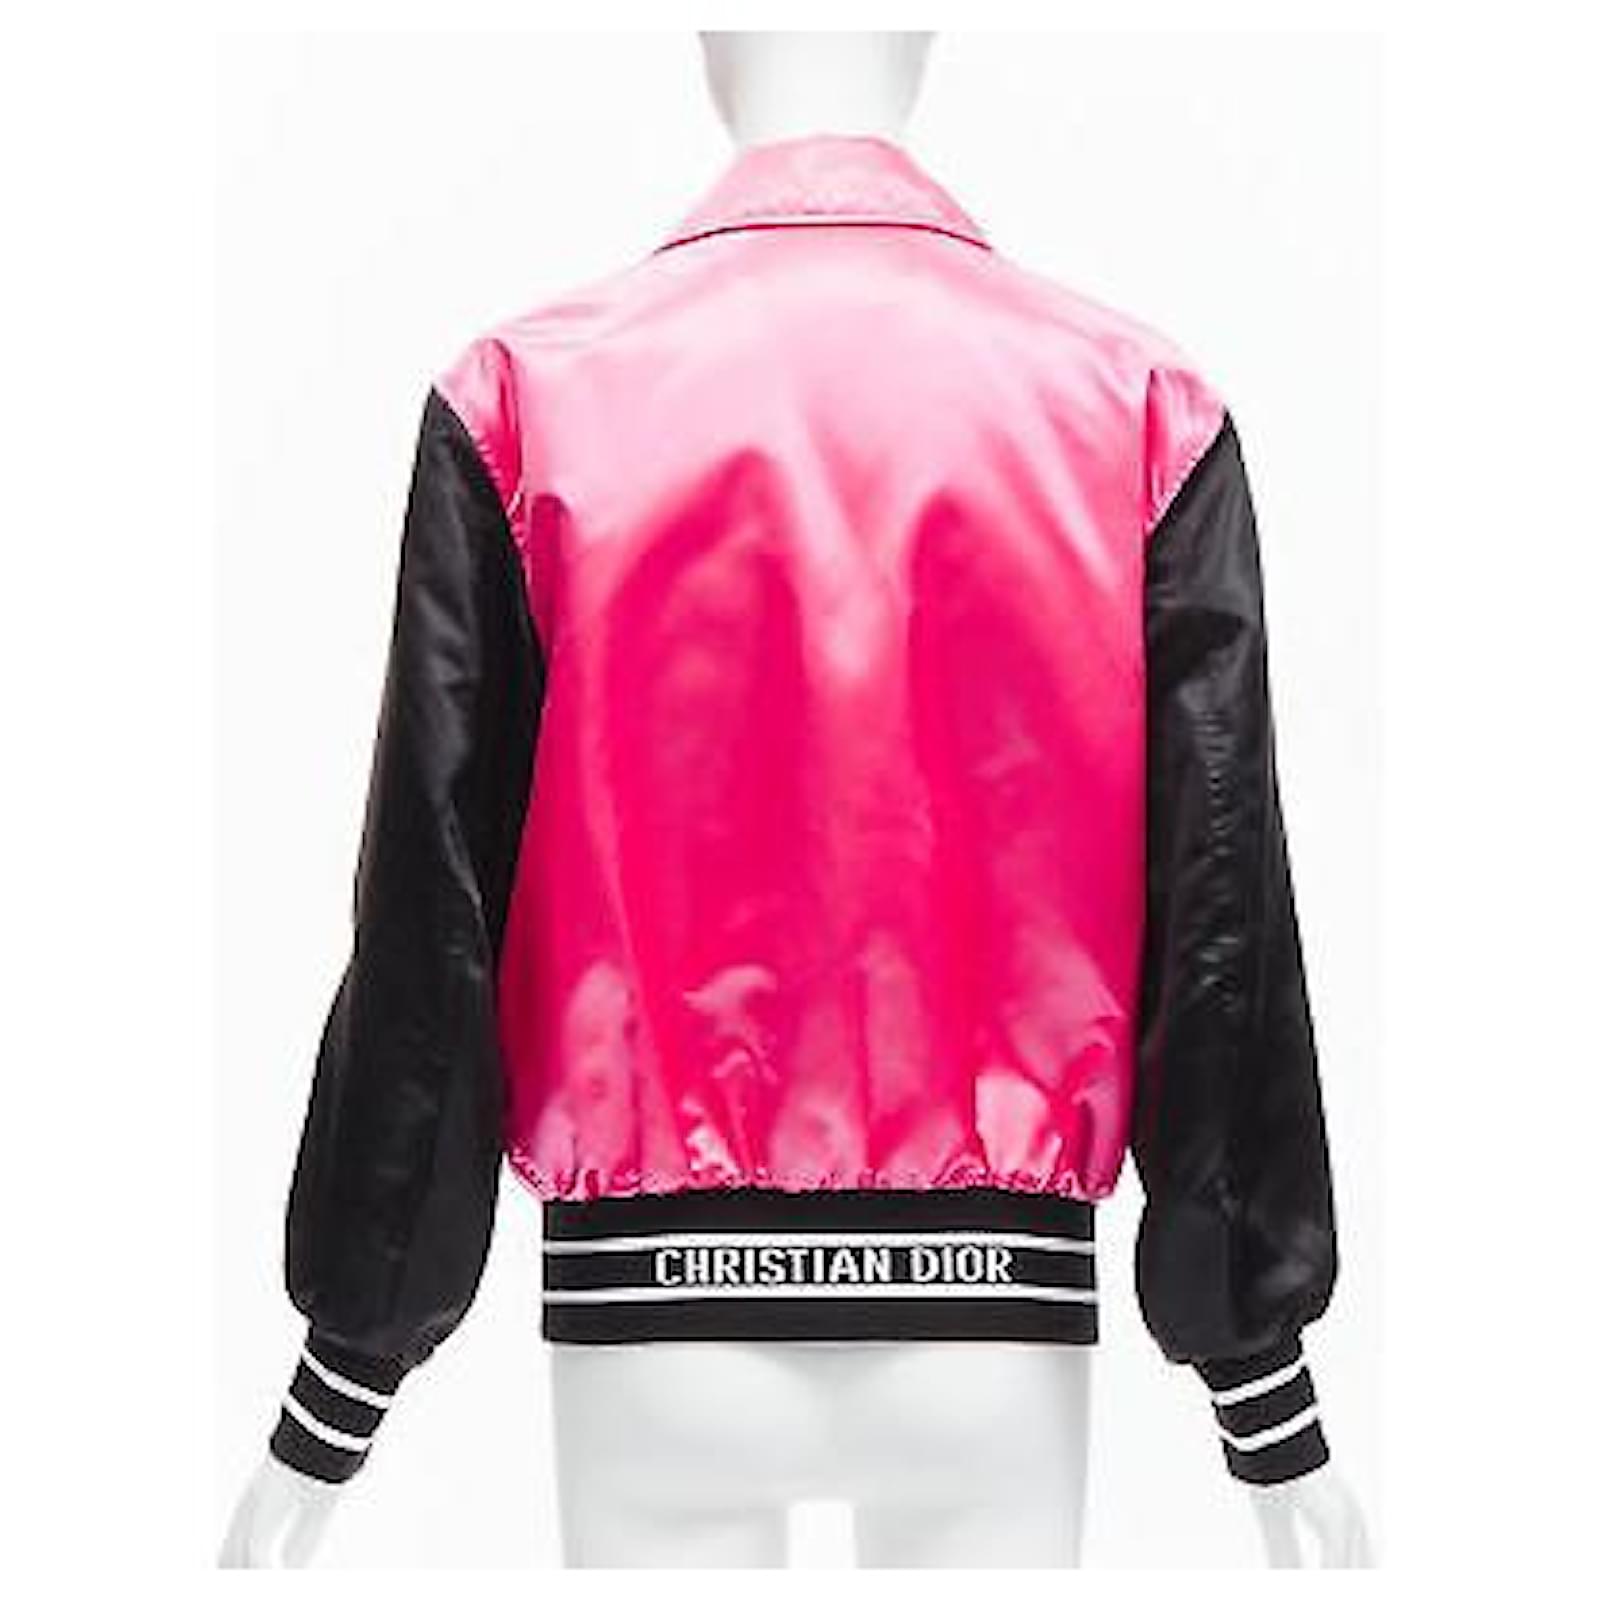 m  on Twitter thinking about this pink dior jacket  httpstcoWaDqkImCZl  Twitter